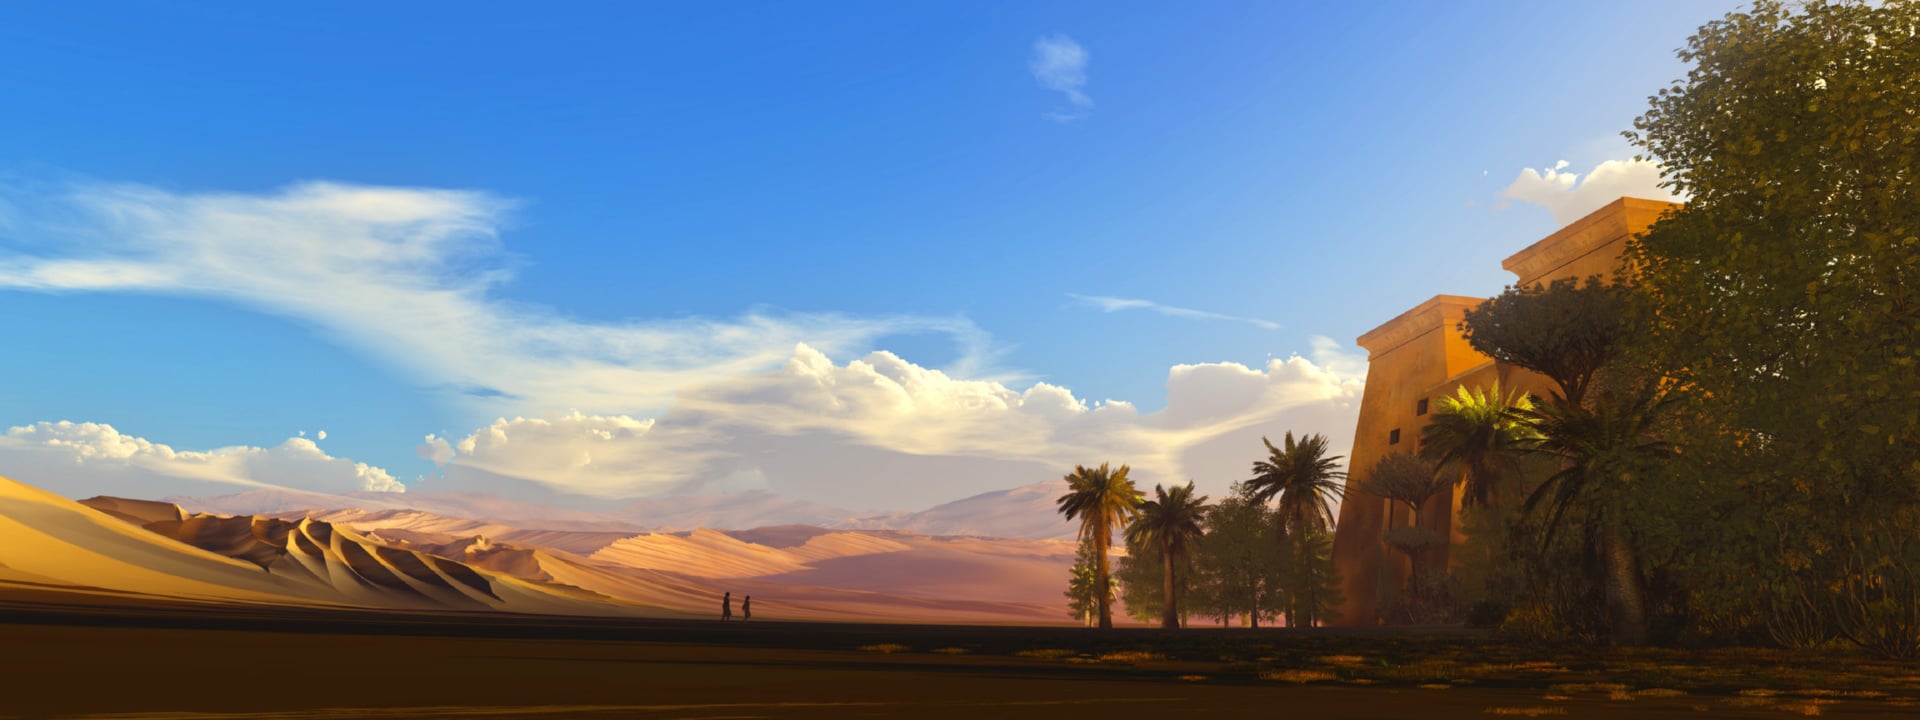 Digital Art Desert at 2048 x 2048 iPad size wallpapers HD quality